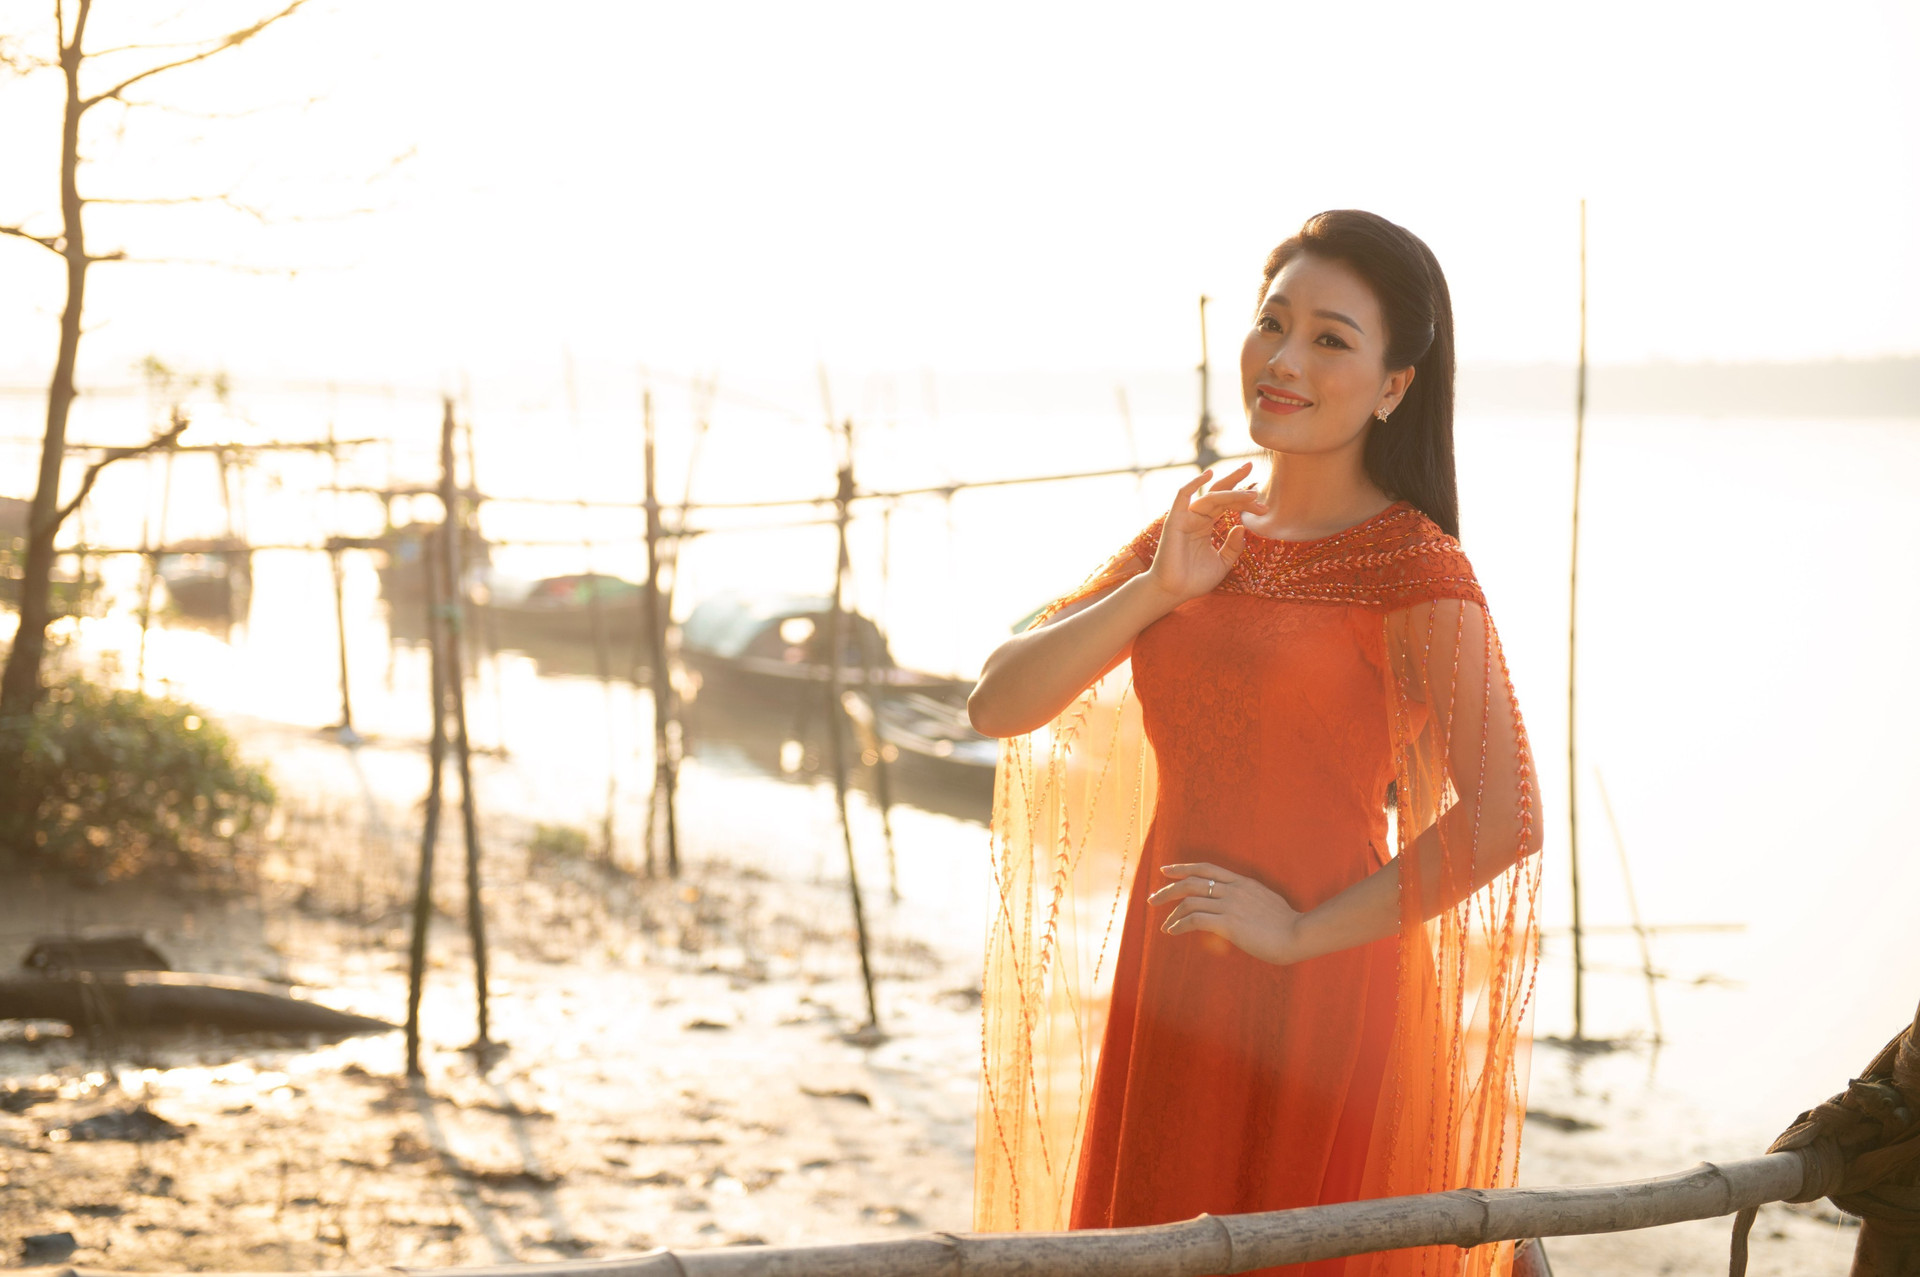 Sao Mai Huyền Trang ra mắt MV 